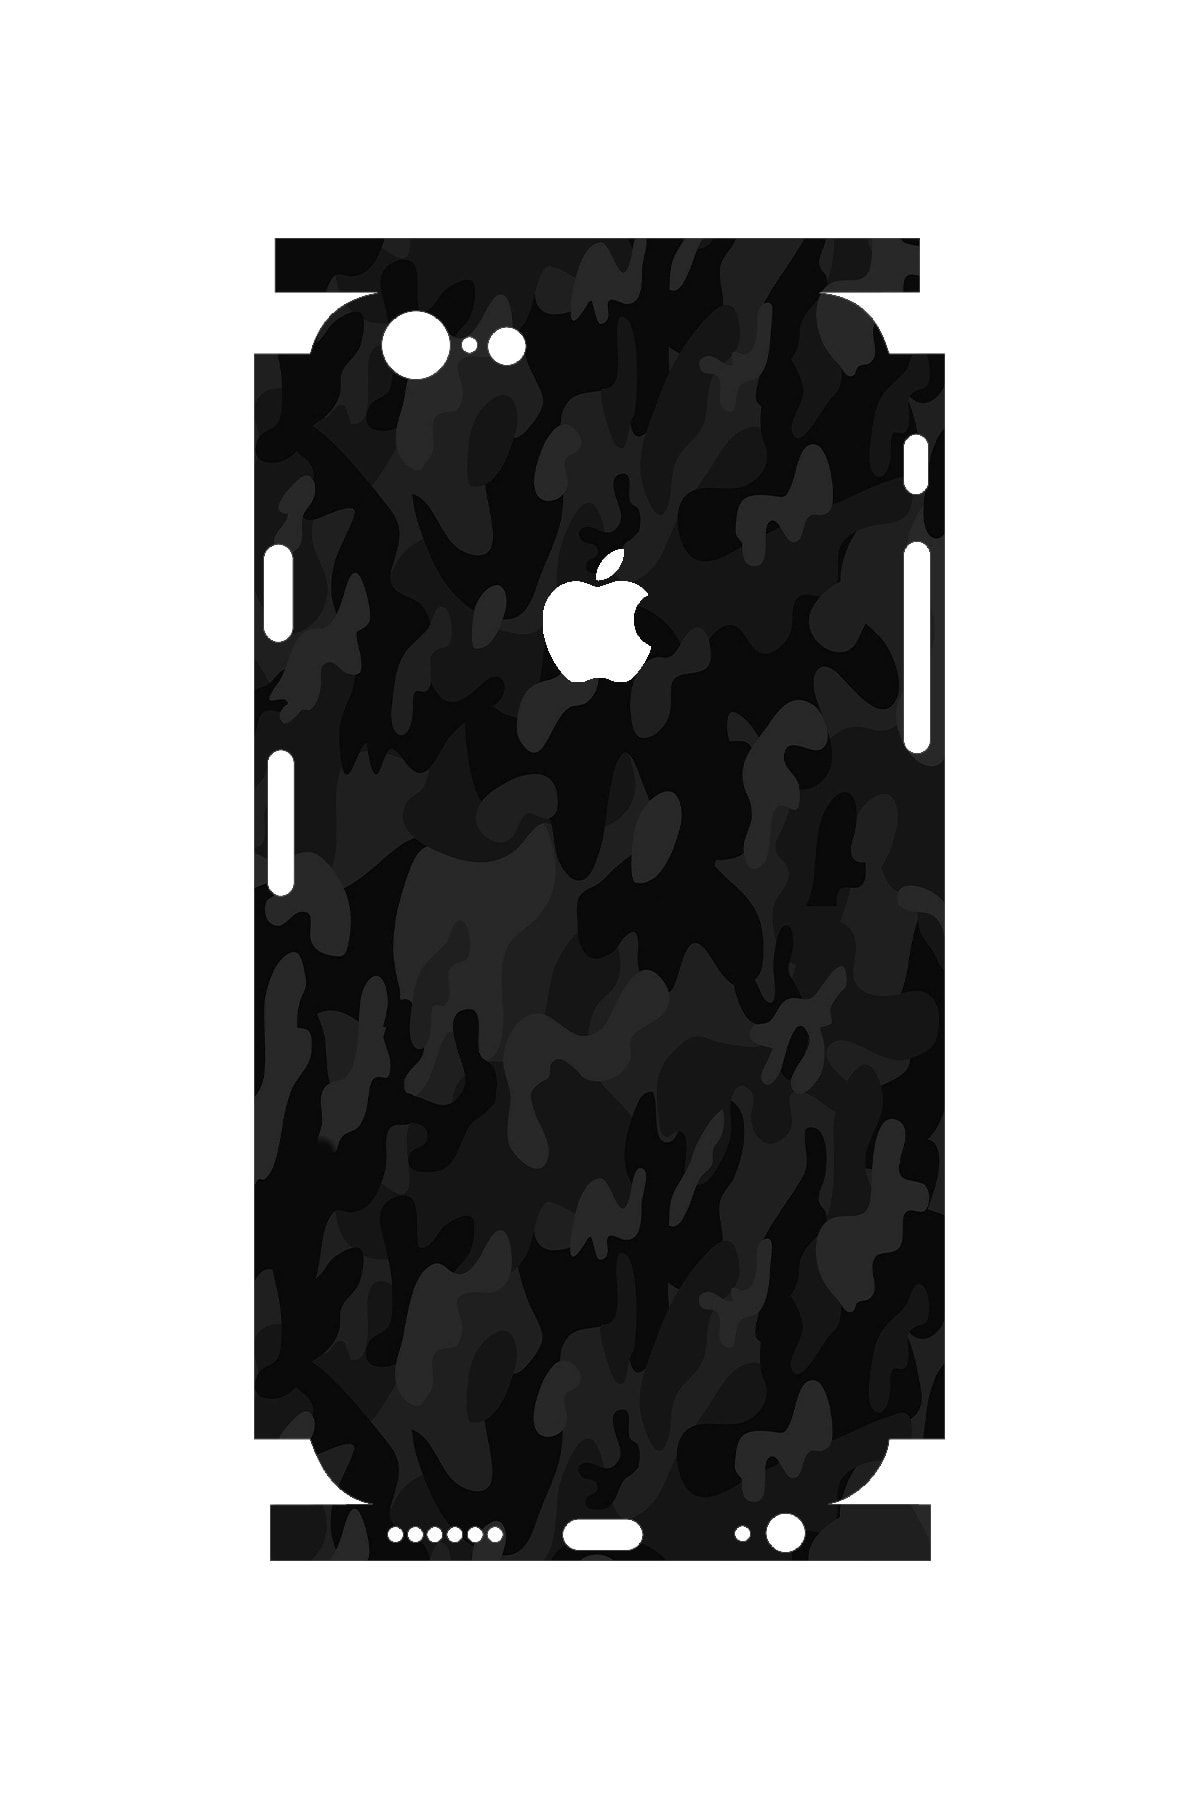 NANOSPACE Apple Iphone 6 Plus Kamuflaj Telefon Kaplaması Full Cover 3m Sticker Kaplama